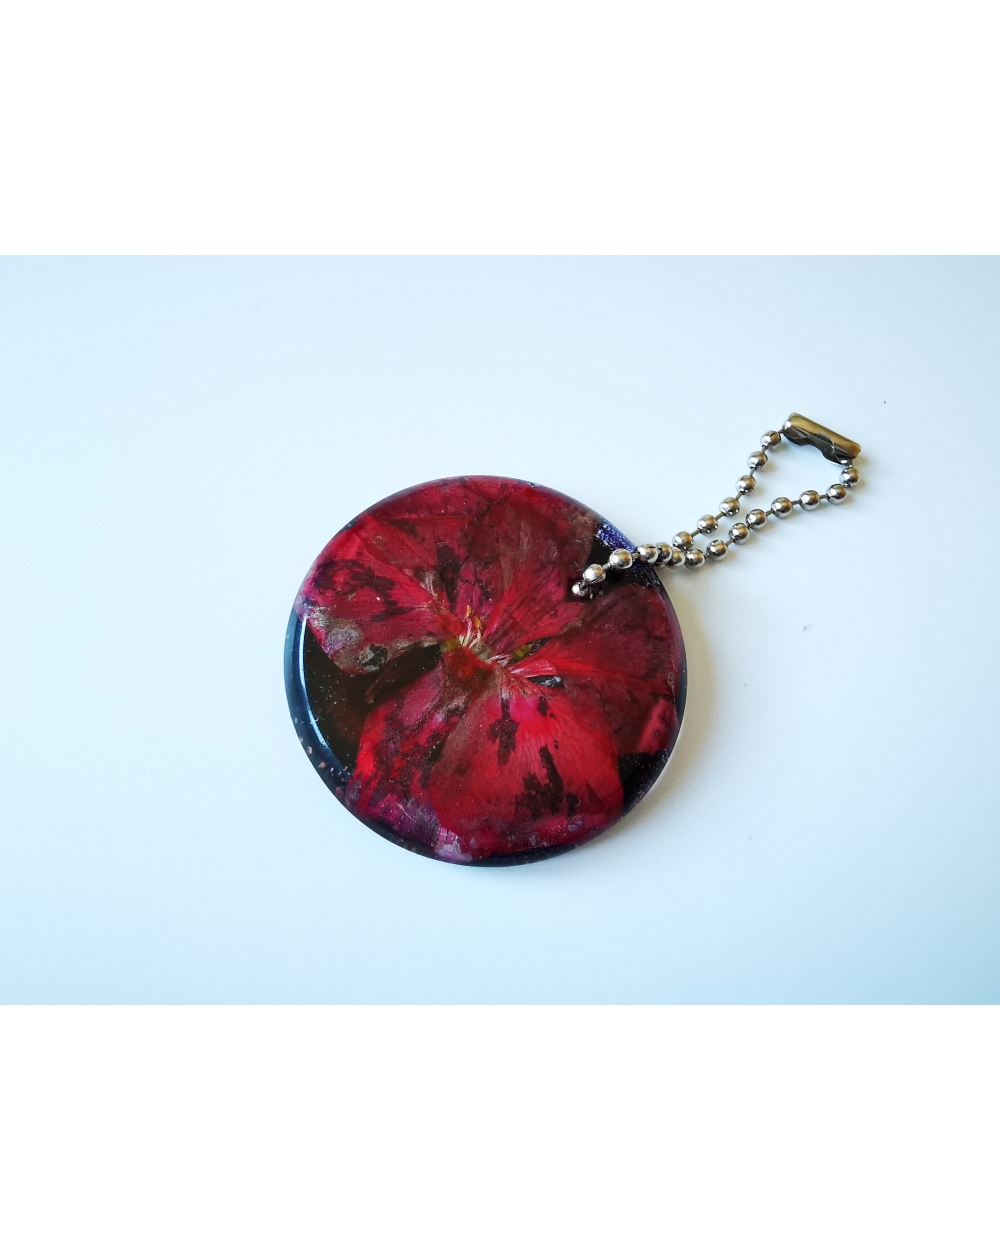 Galaxy flower keychain series I dried red geranium